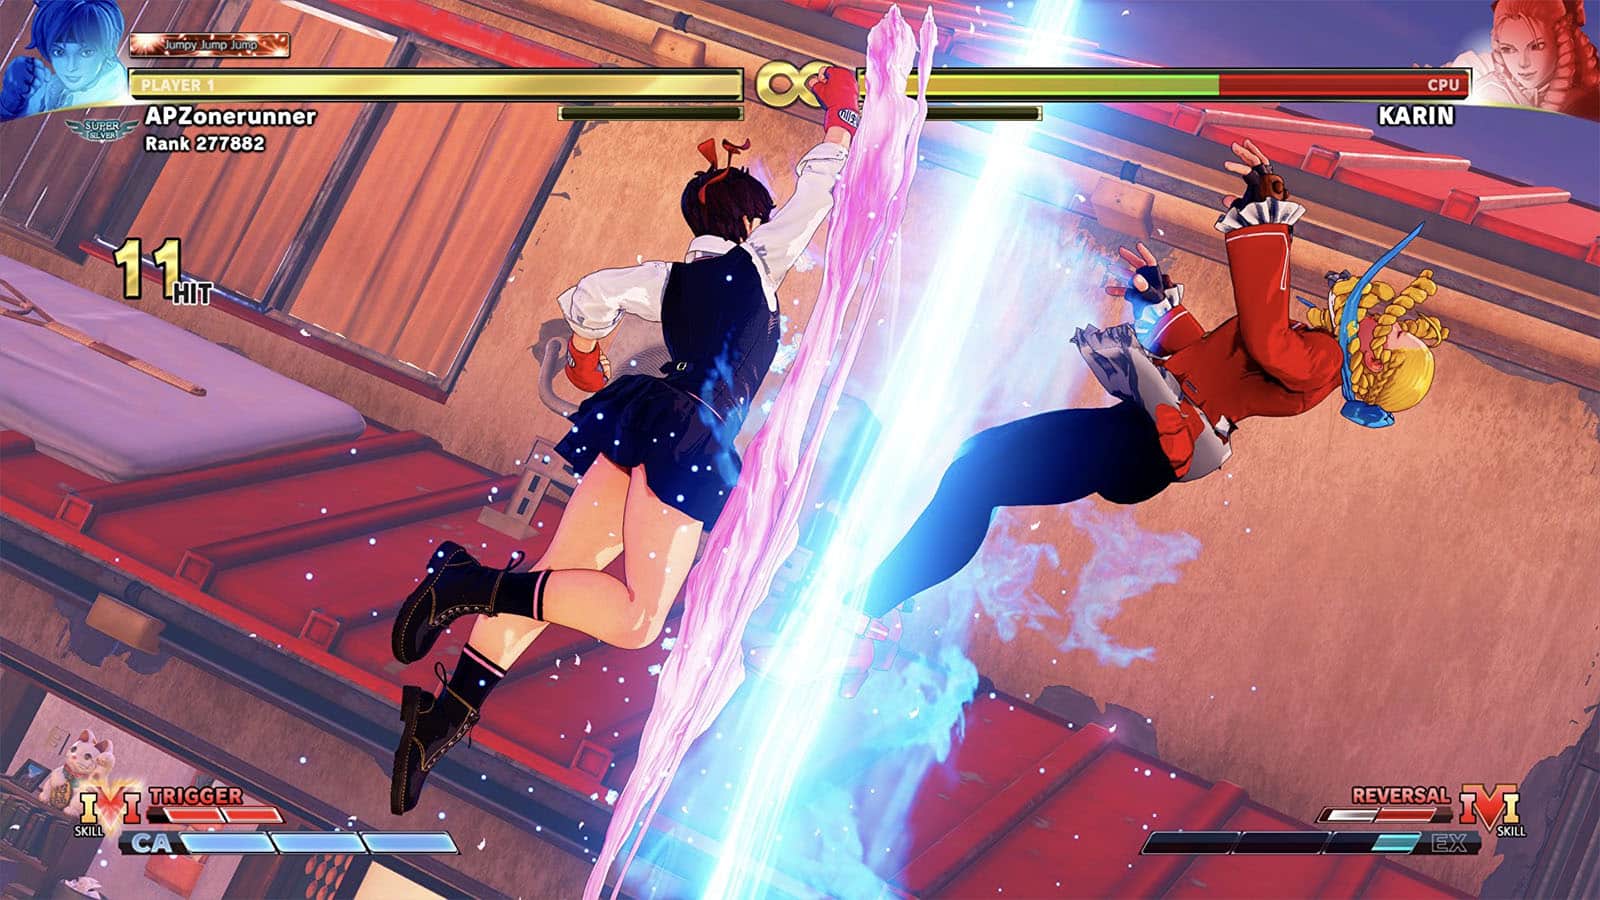 Sakura punches Kolin in Street Fighter 5